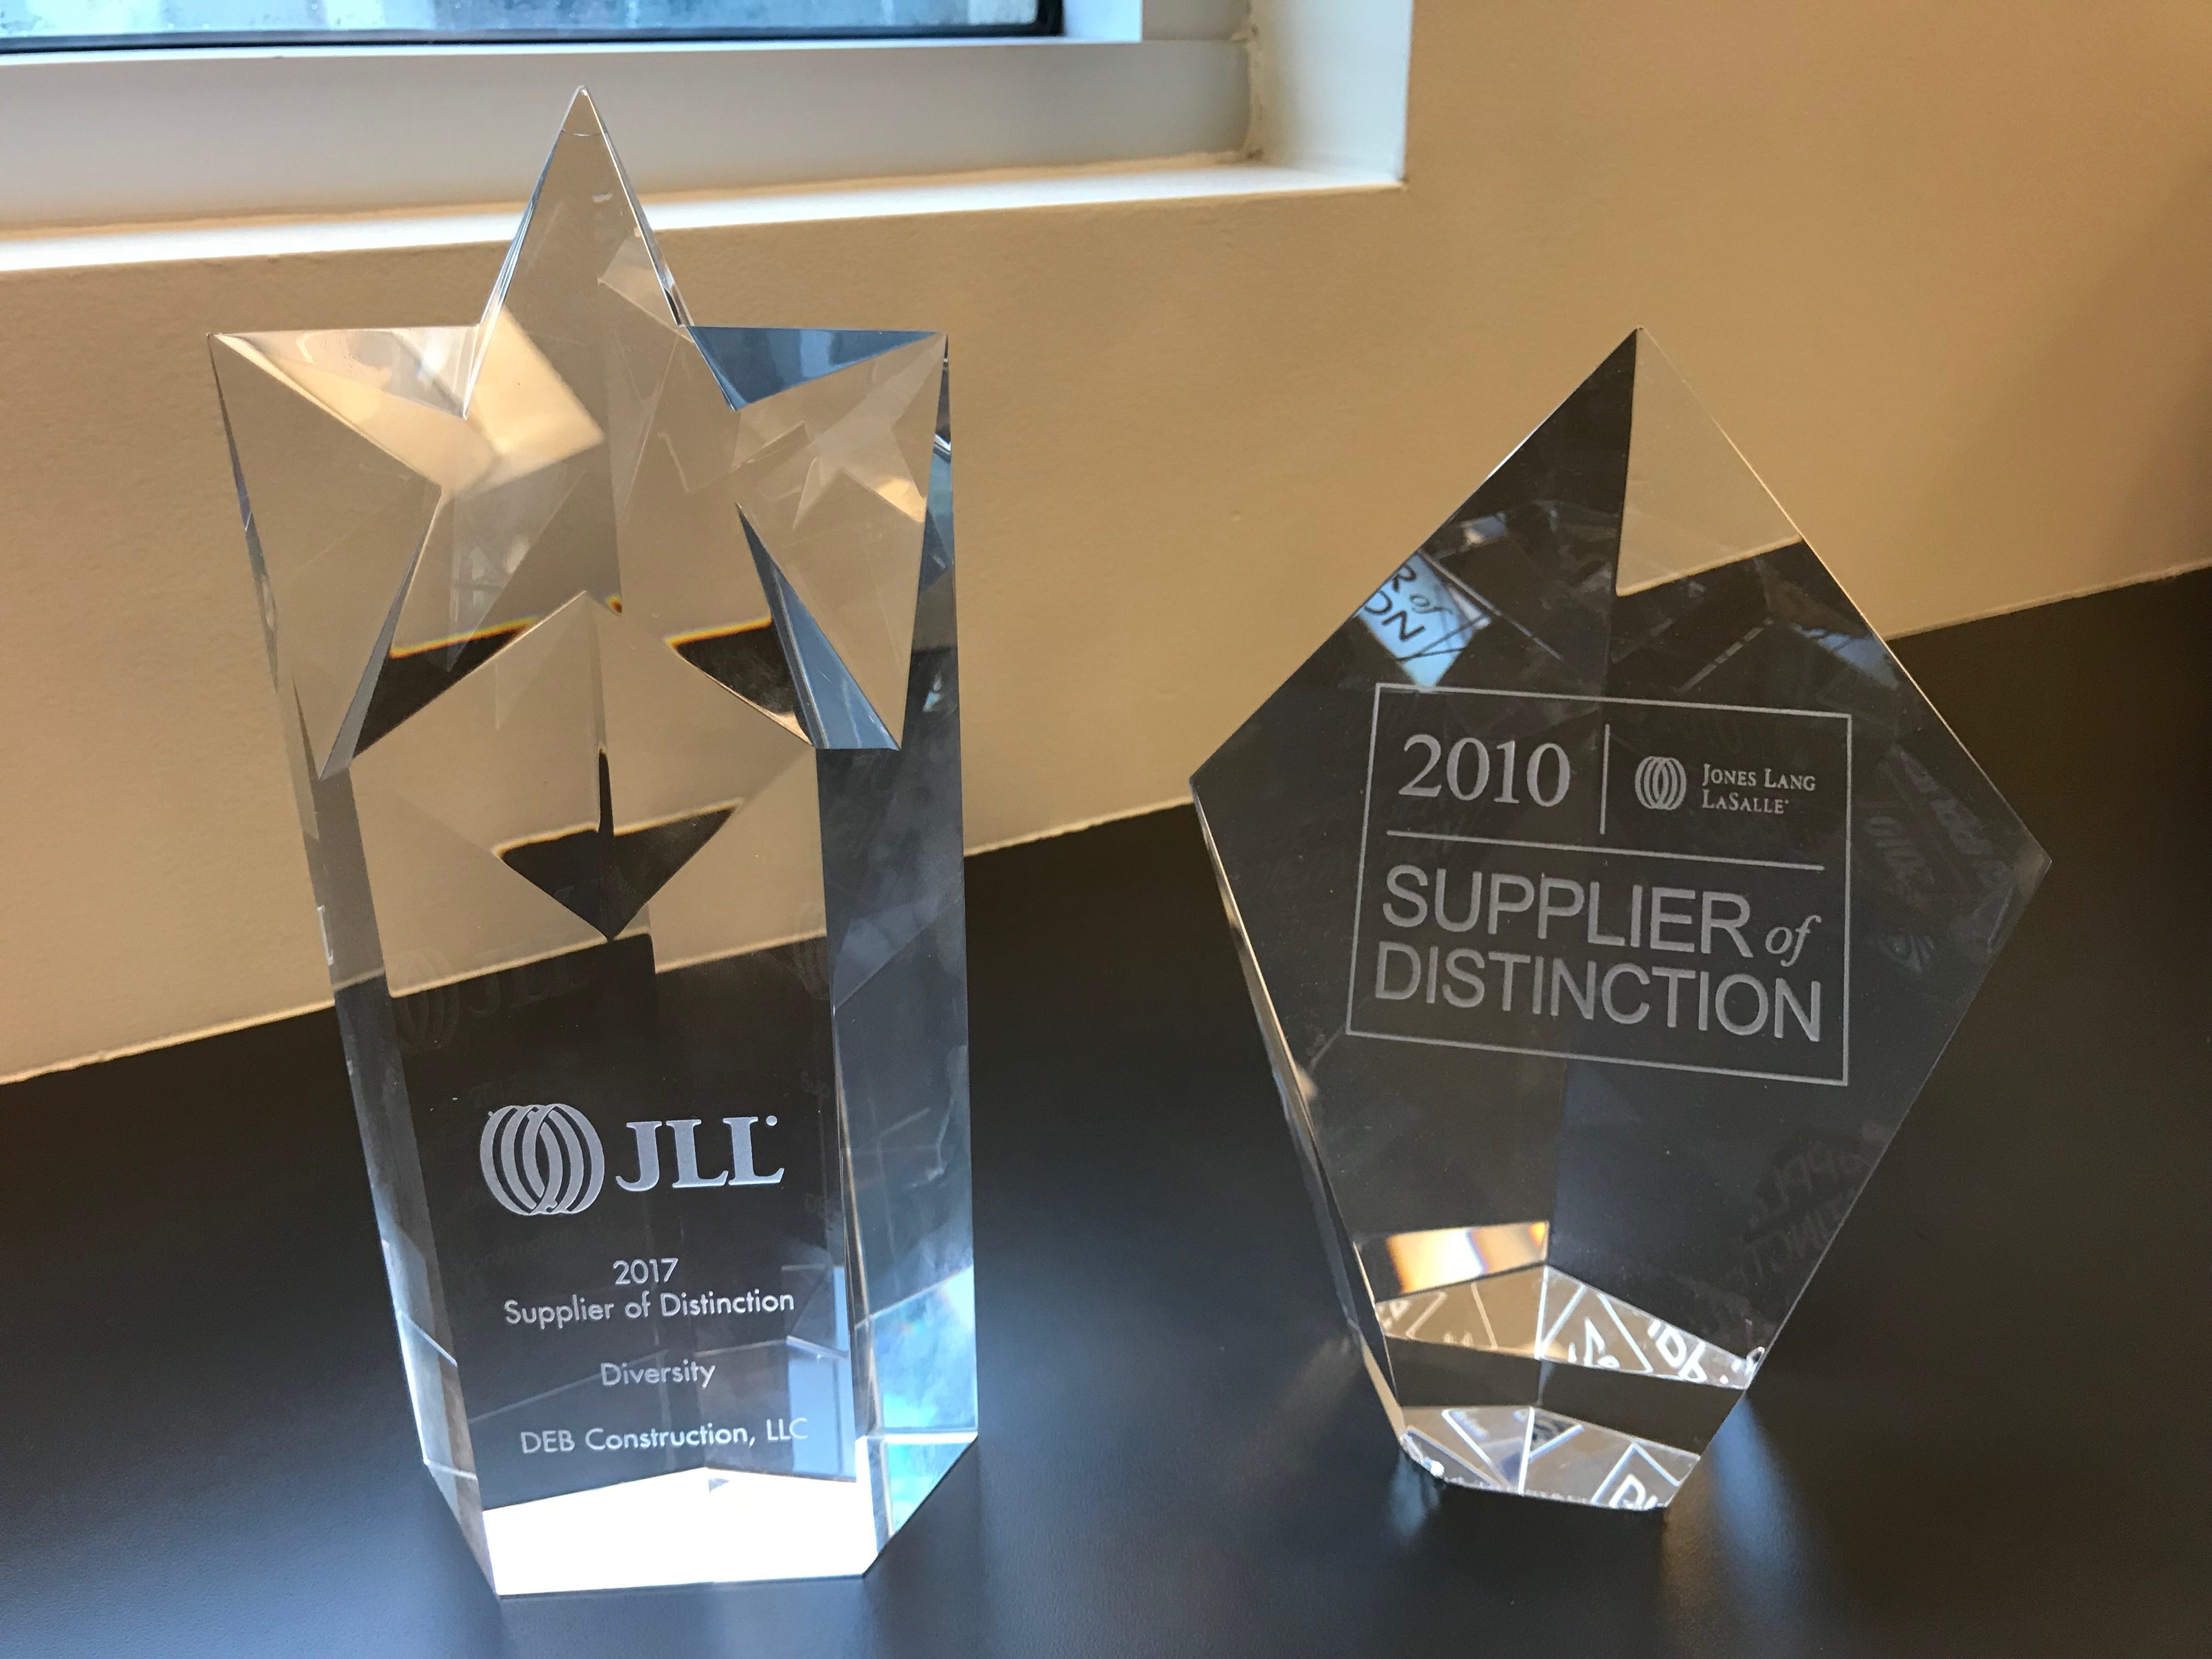 Jones Lang LaSalle (JLL) Supplier of Distinction Award